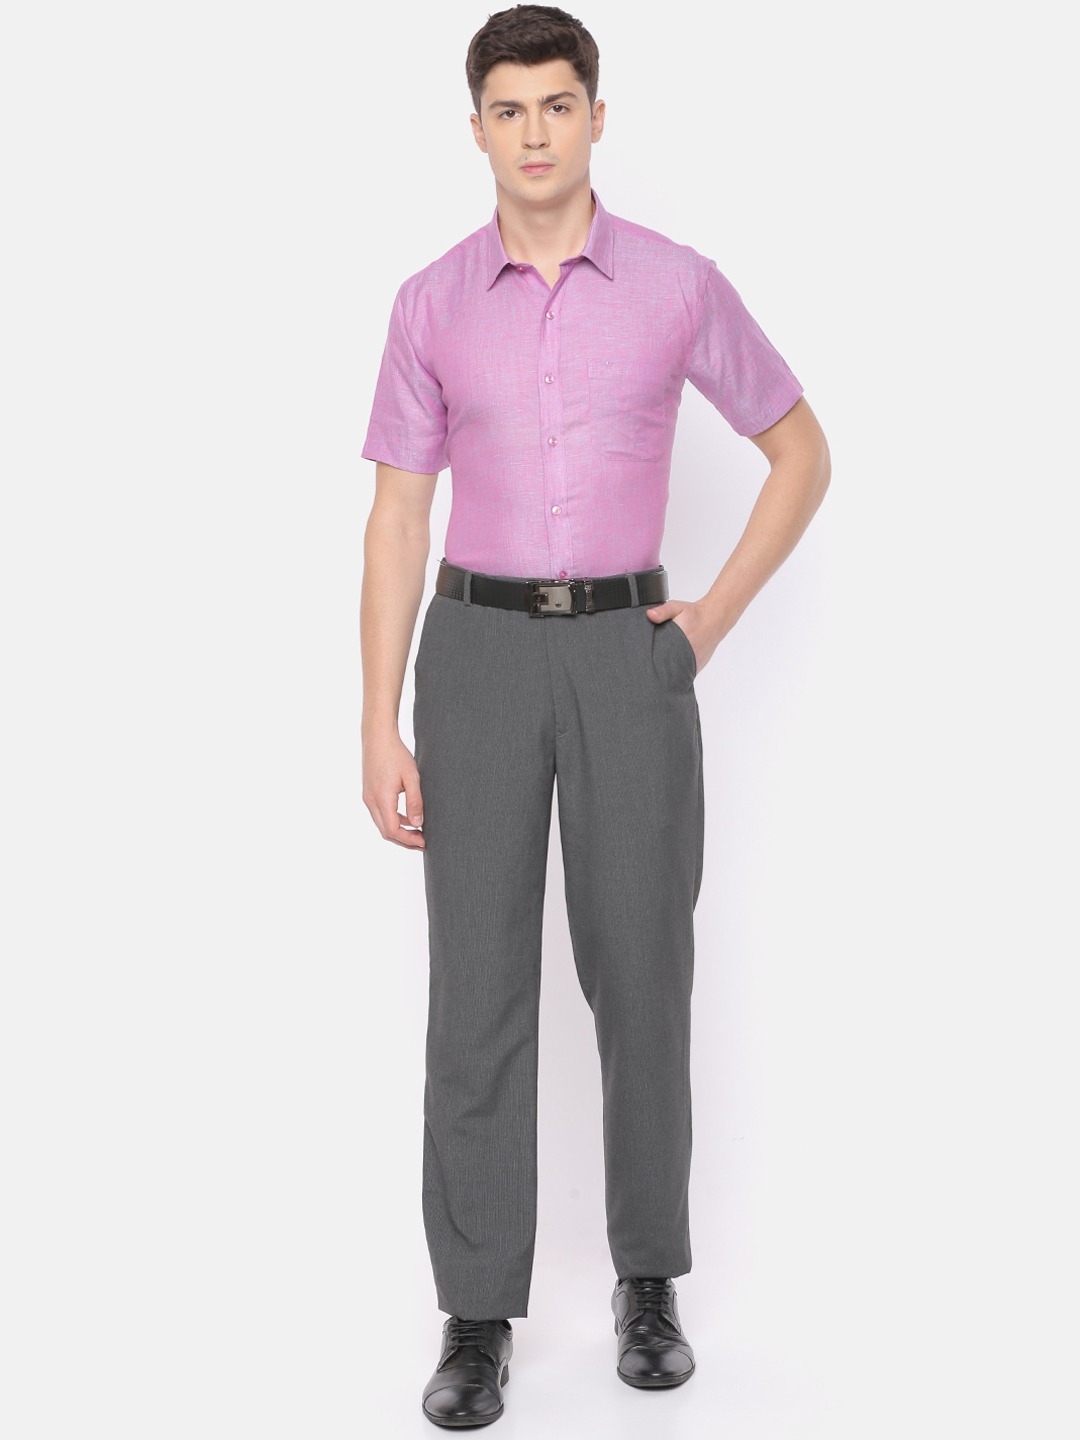 Ramraj Cotton | RAMRAJ COTTON Men Purple Slim Fit Solid Casual Shirt 4